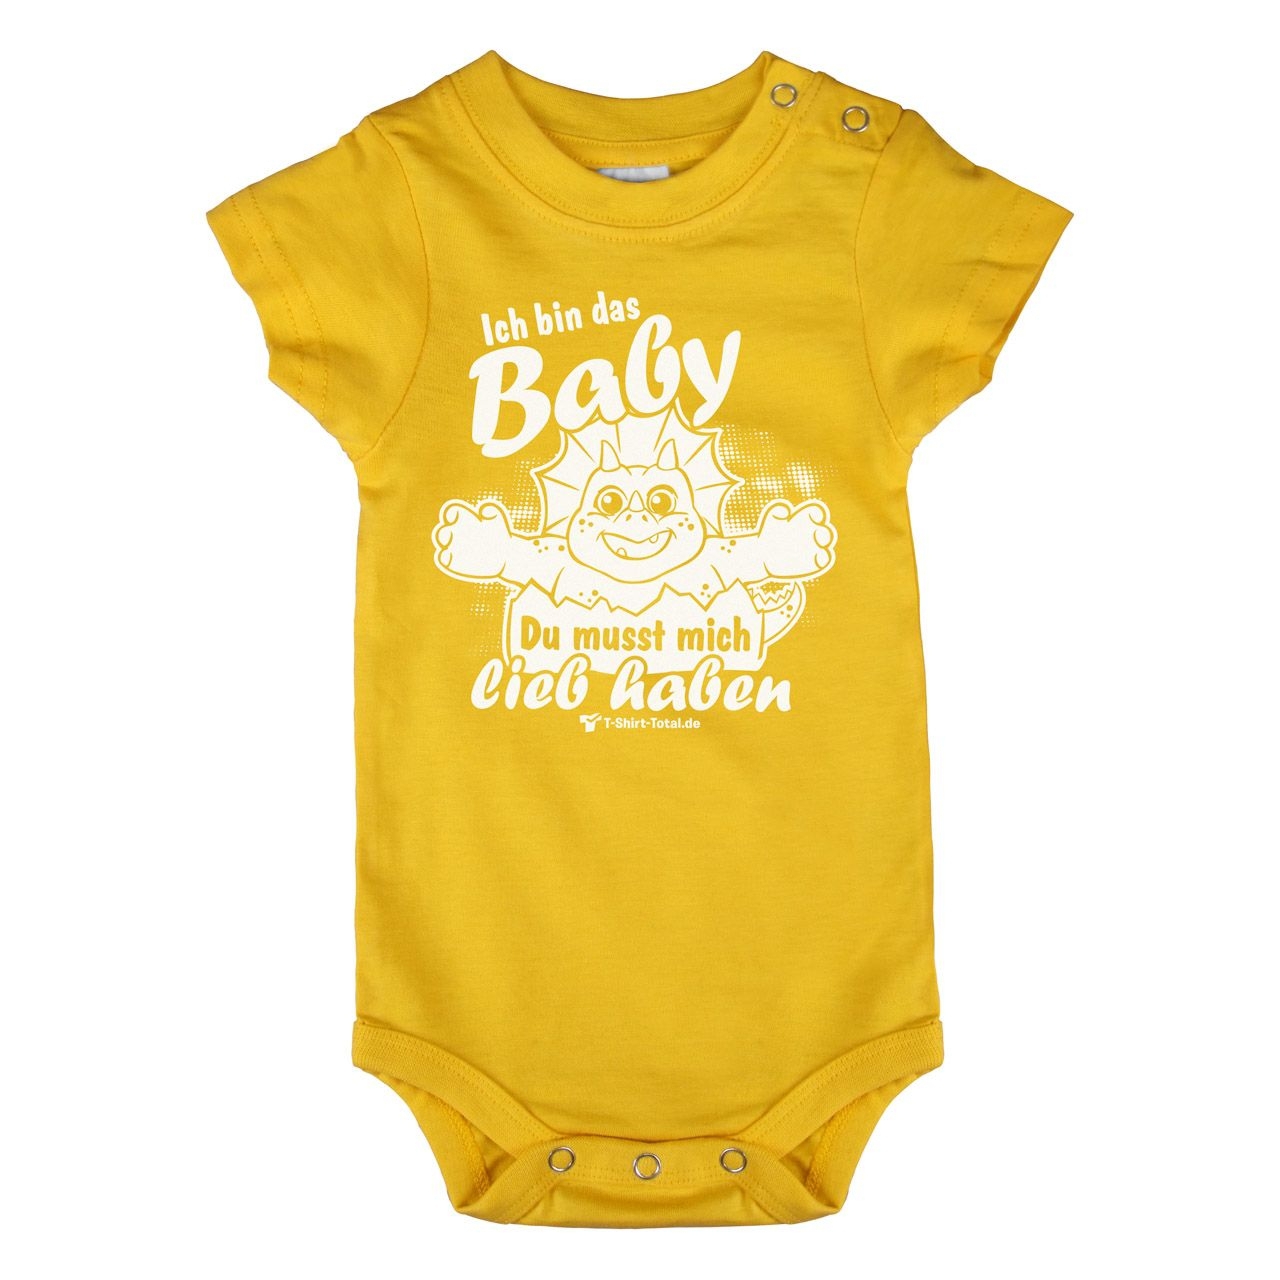 Bin das Baby Baby Body Kurzarm gelb 68 / 74